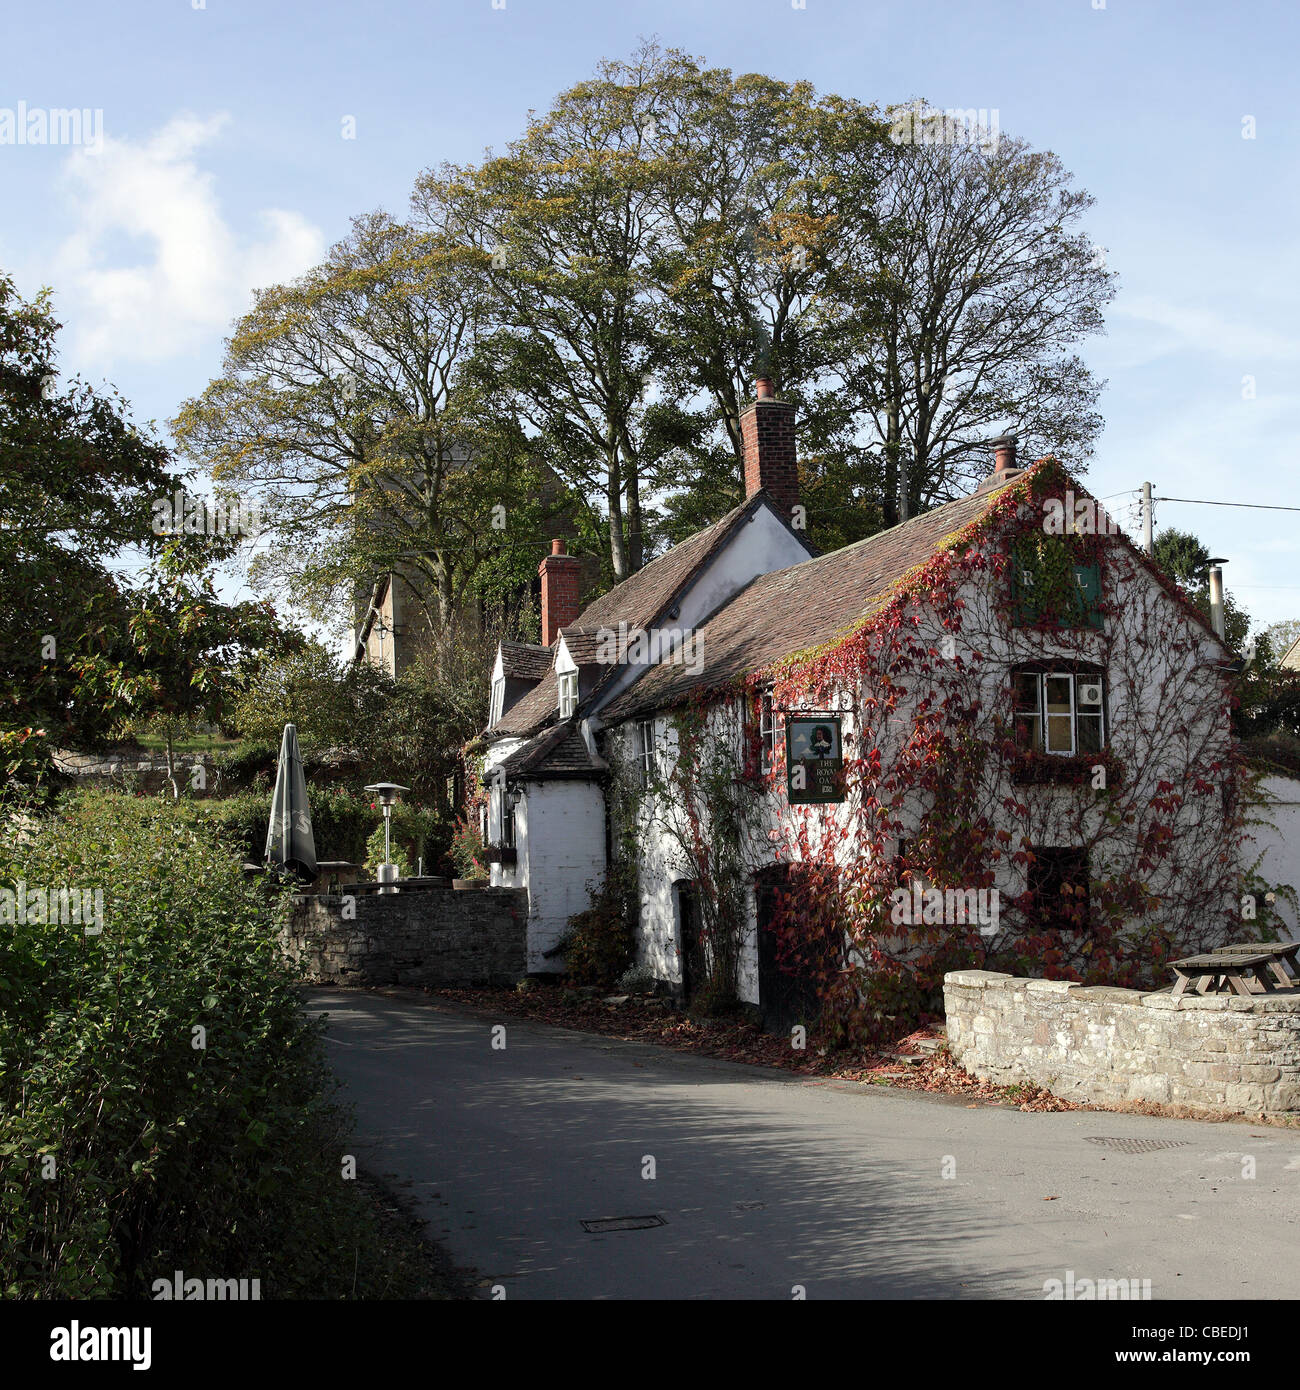 The exterior of The Royal Oak public house in the village of Cardington, Shropshire, England. Stock Photo